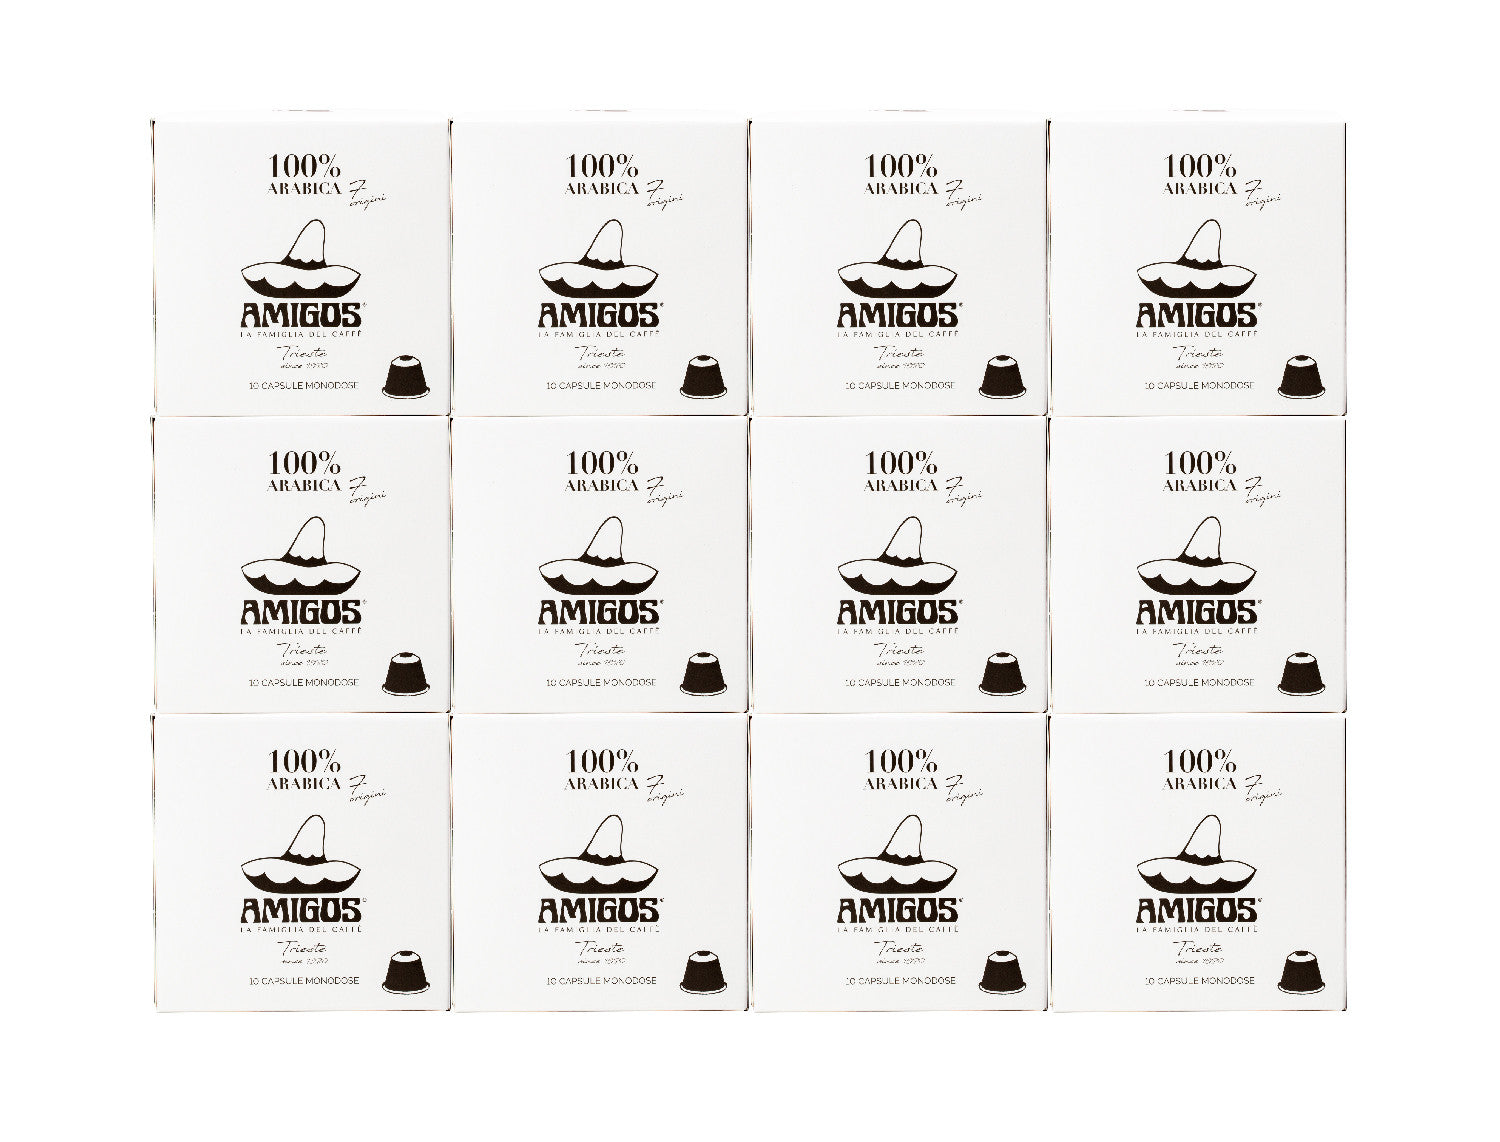 Qualità 7 Origini 100% arabica Nespresso® kapseln